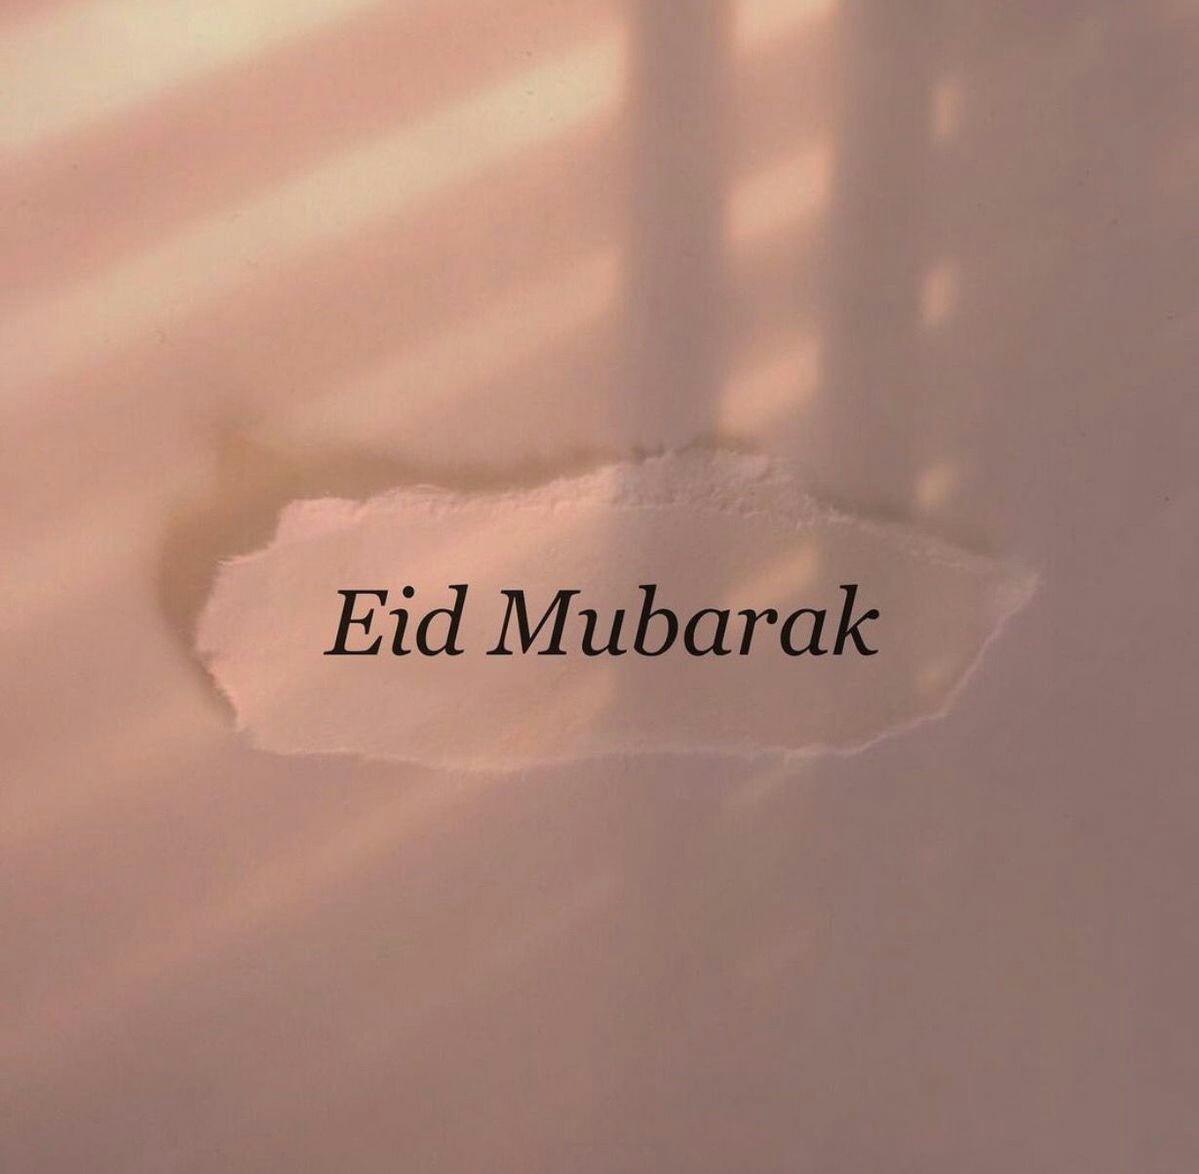 Eid mubarak quotes in Malayalam